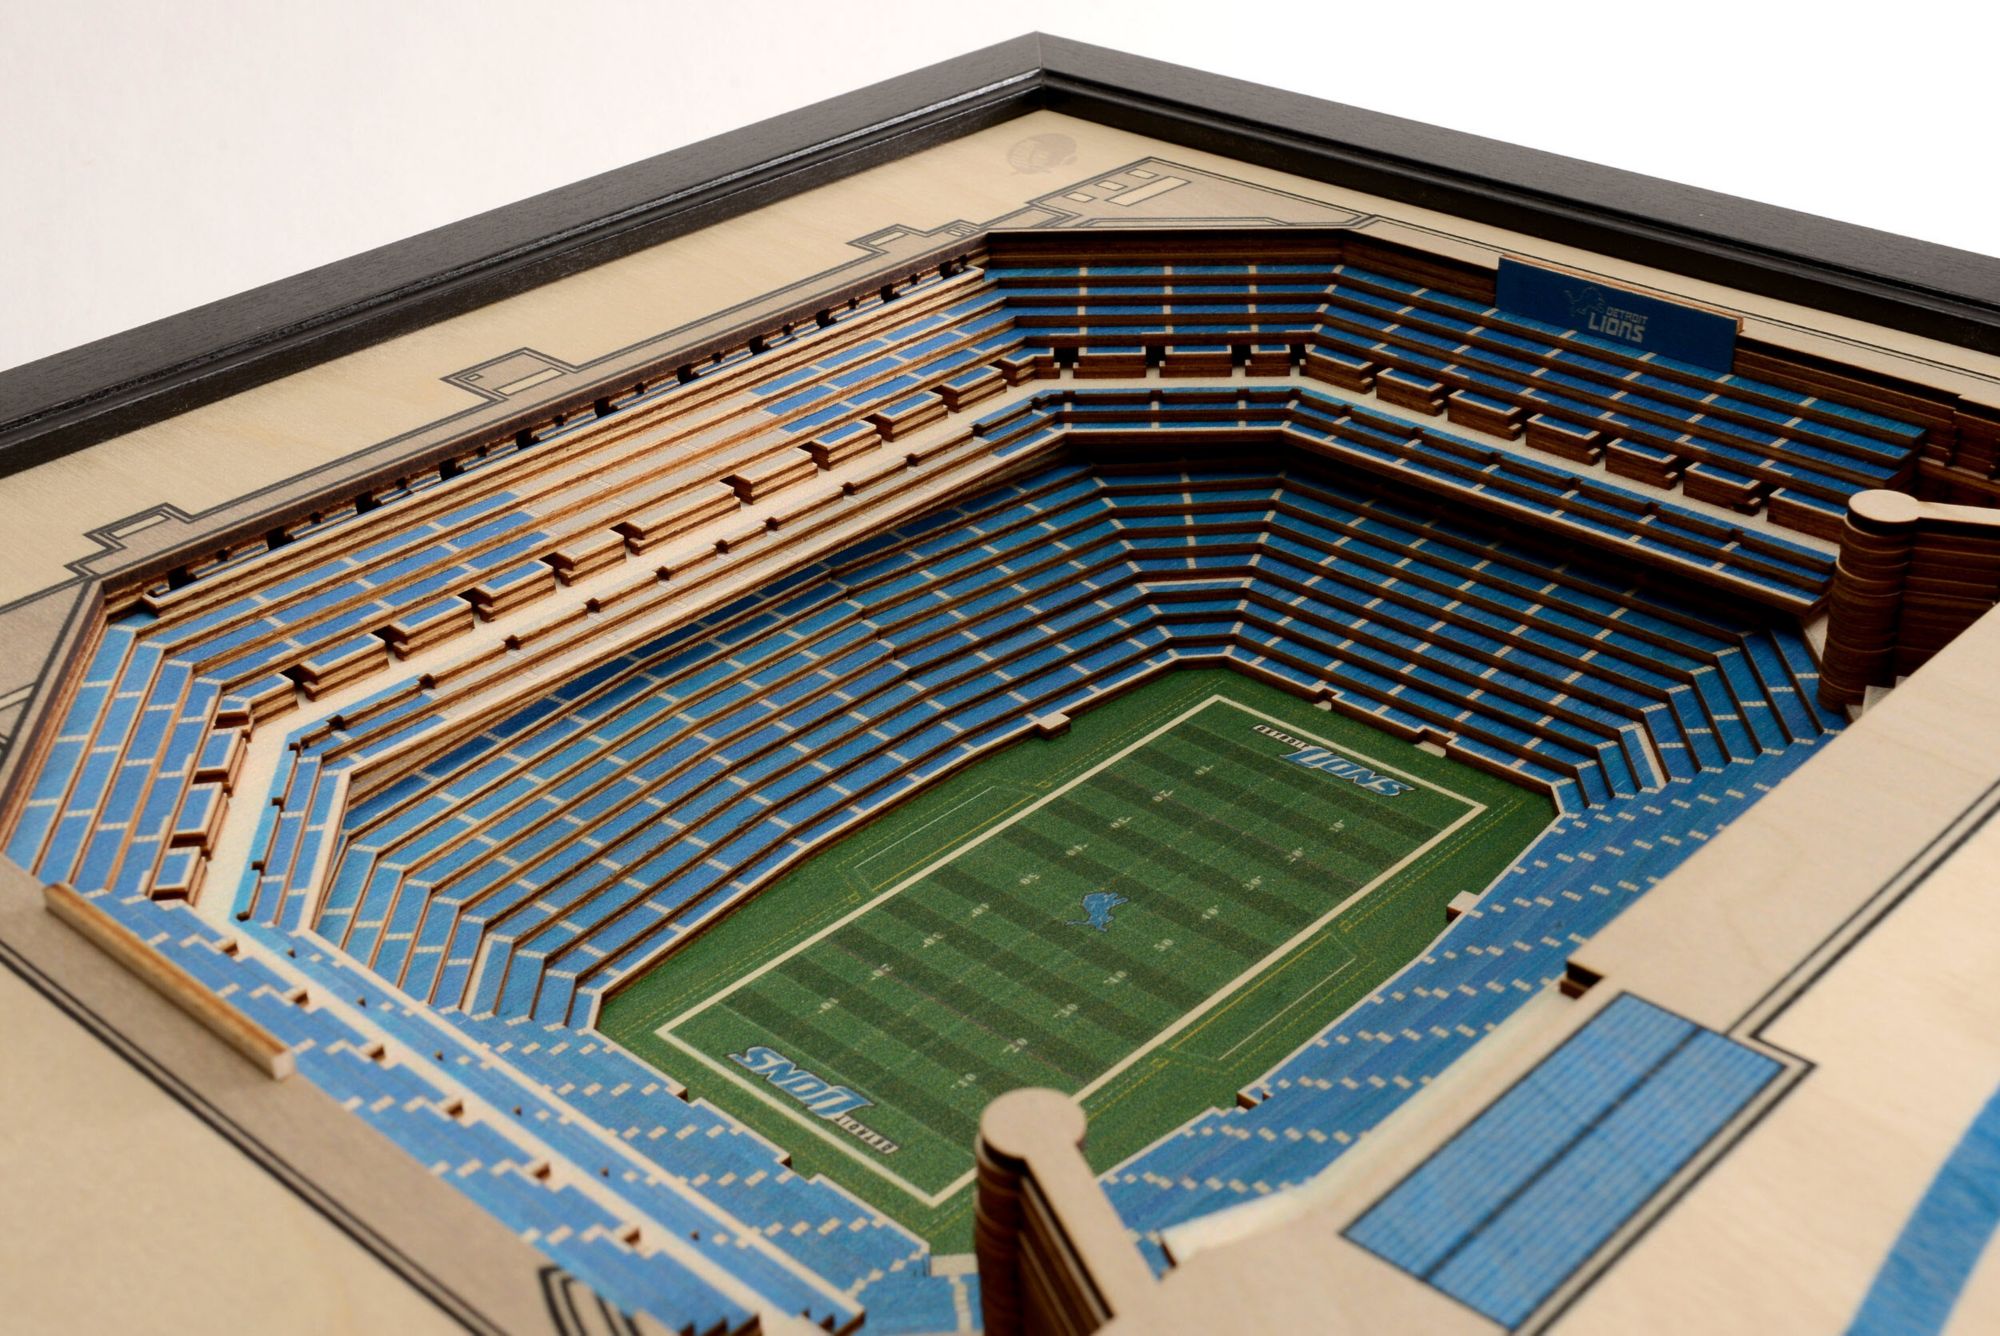 You the Fan Detroit Lions 25-Layer StadiumViews 3D Wall Art